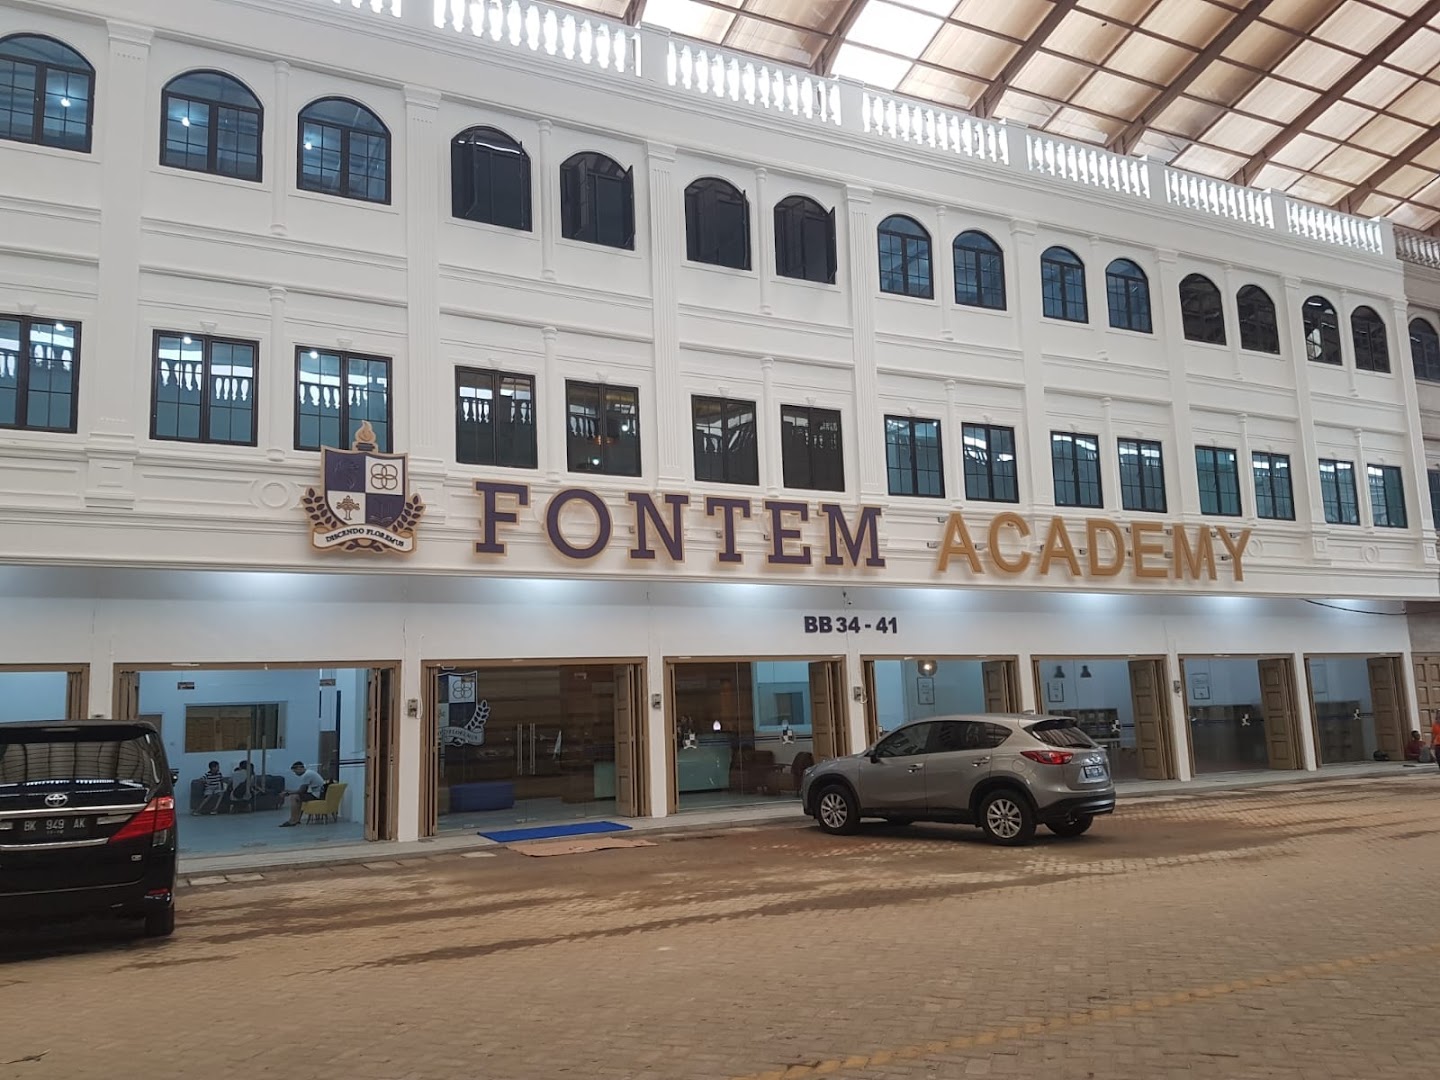 Sekolah Fontem Academy Photo